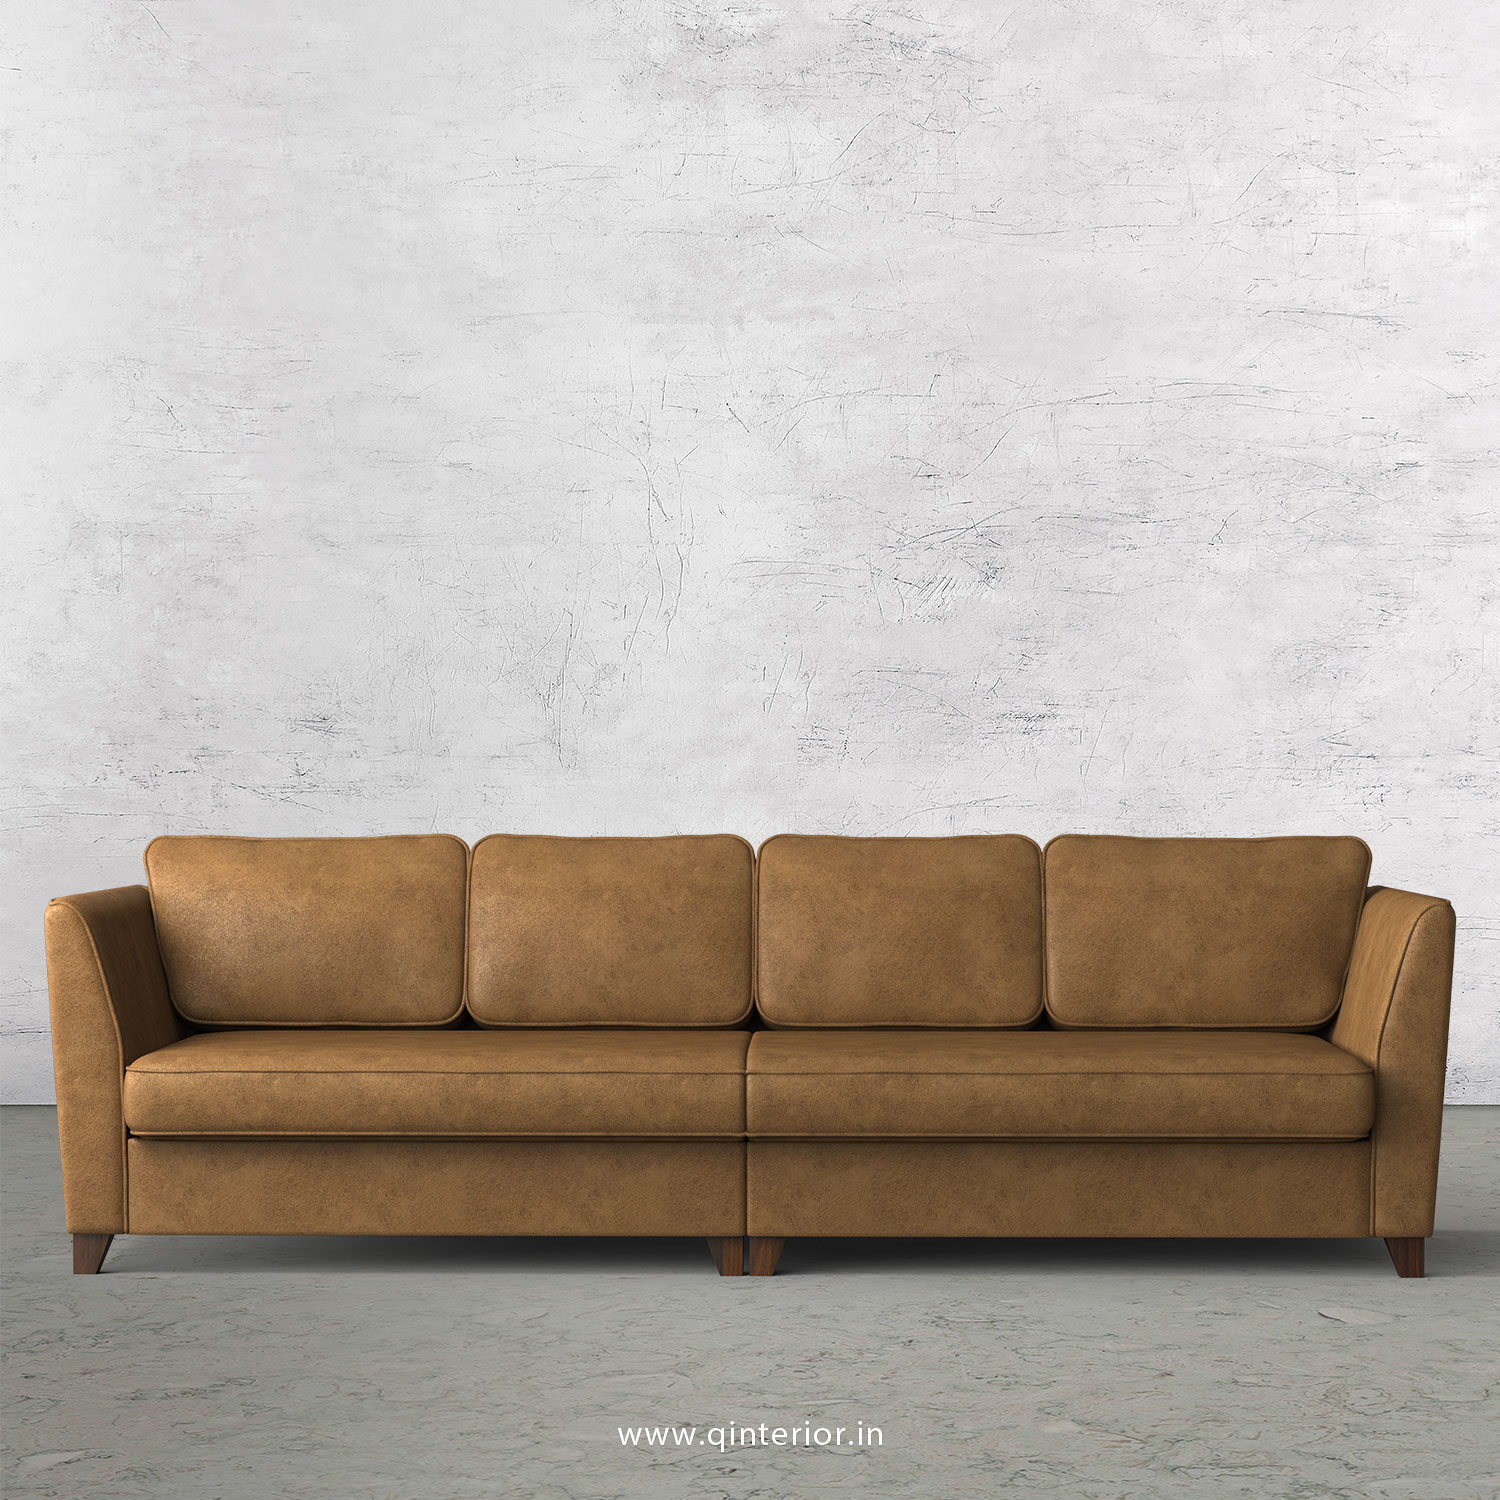 Kingstone 4 Seater Sofa in Fab Leather Fabric - SFA004 FL02